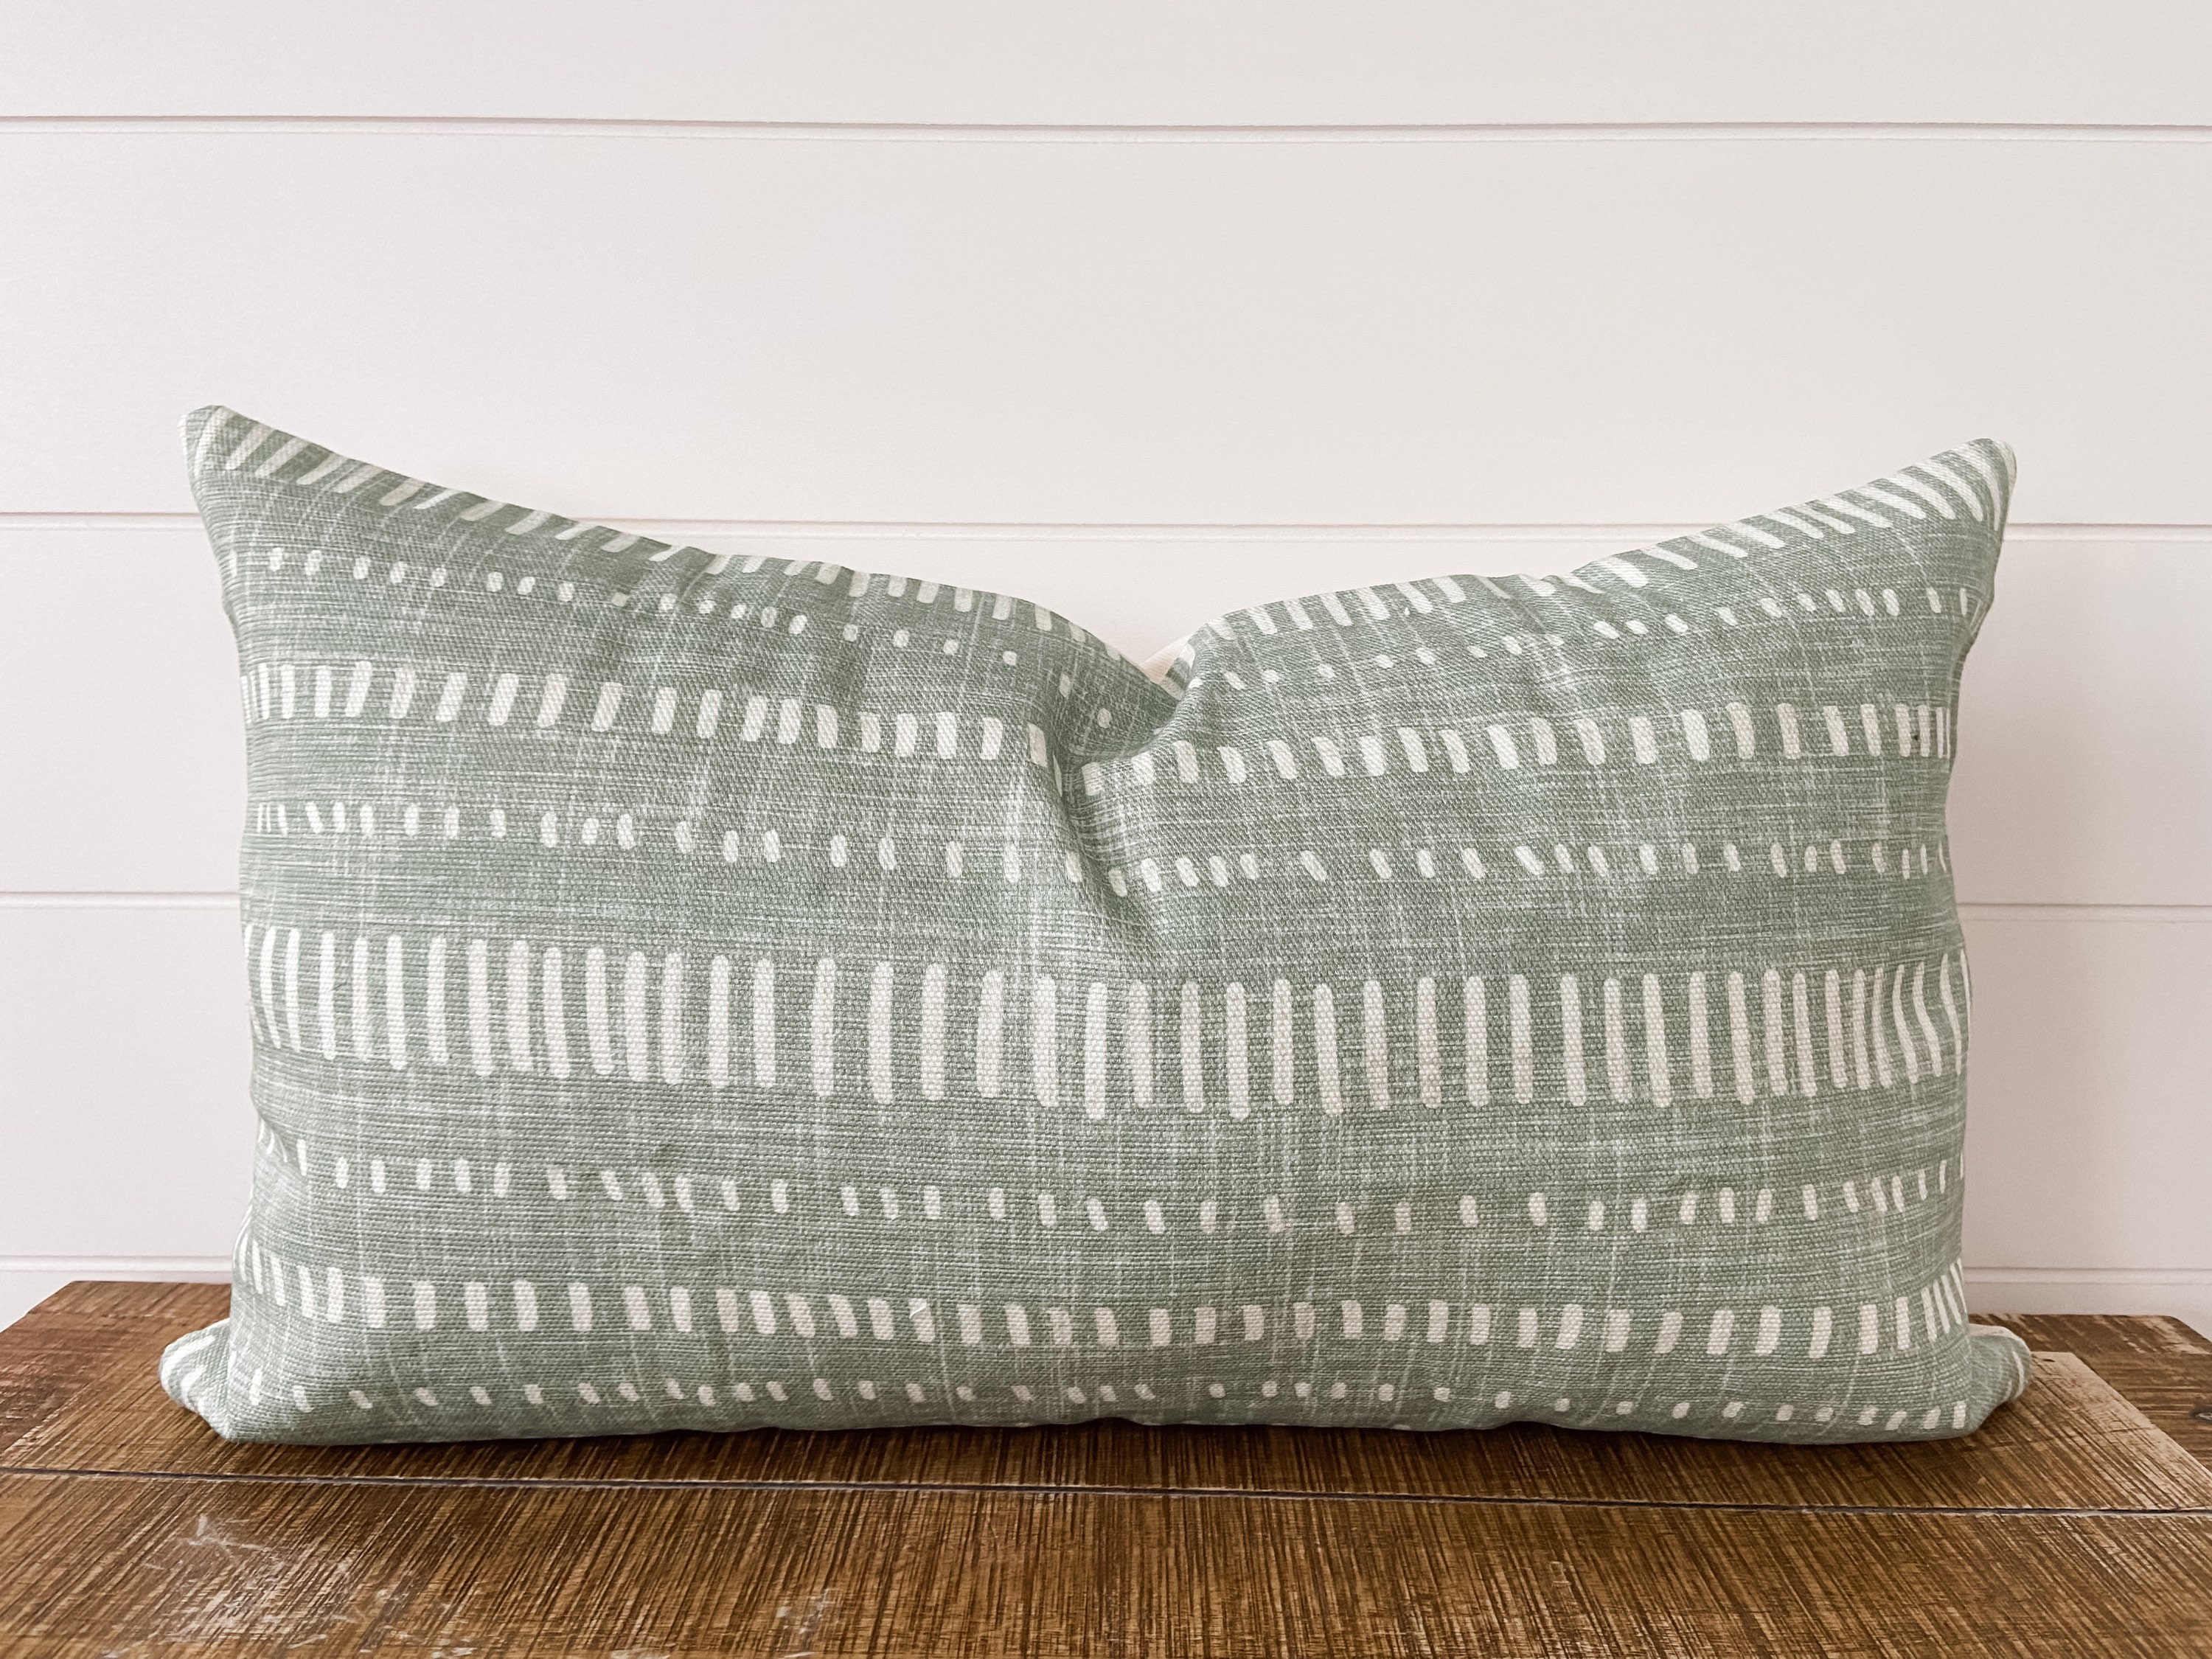 SAFAVIEH Grema Boho Fringe Decorative Accent Throw Pillow - On